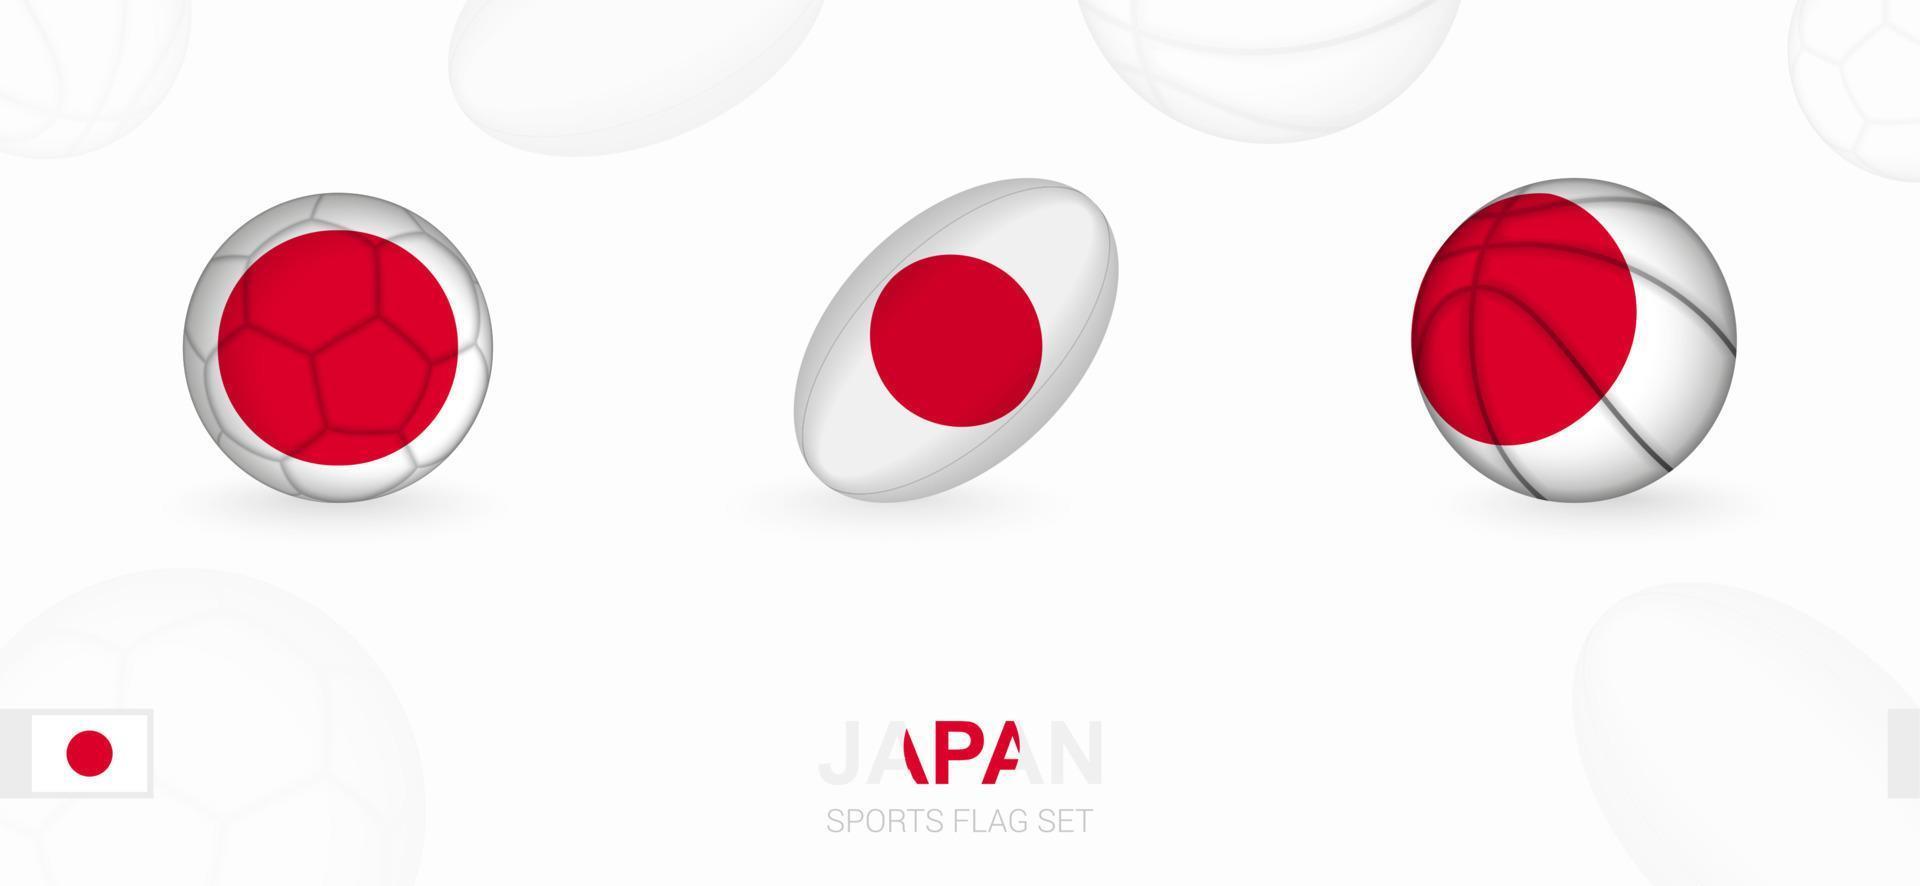 sport- pictogrammen voor Amerikaans voetbal, rugby en basketbal met de vlag van Japan. vector